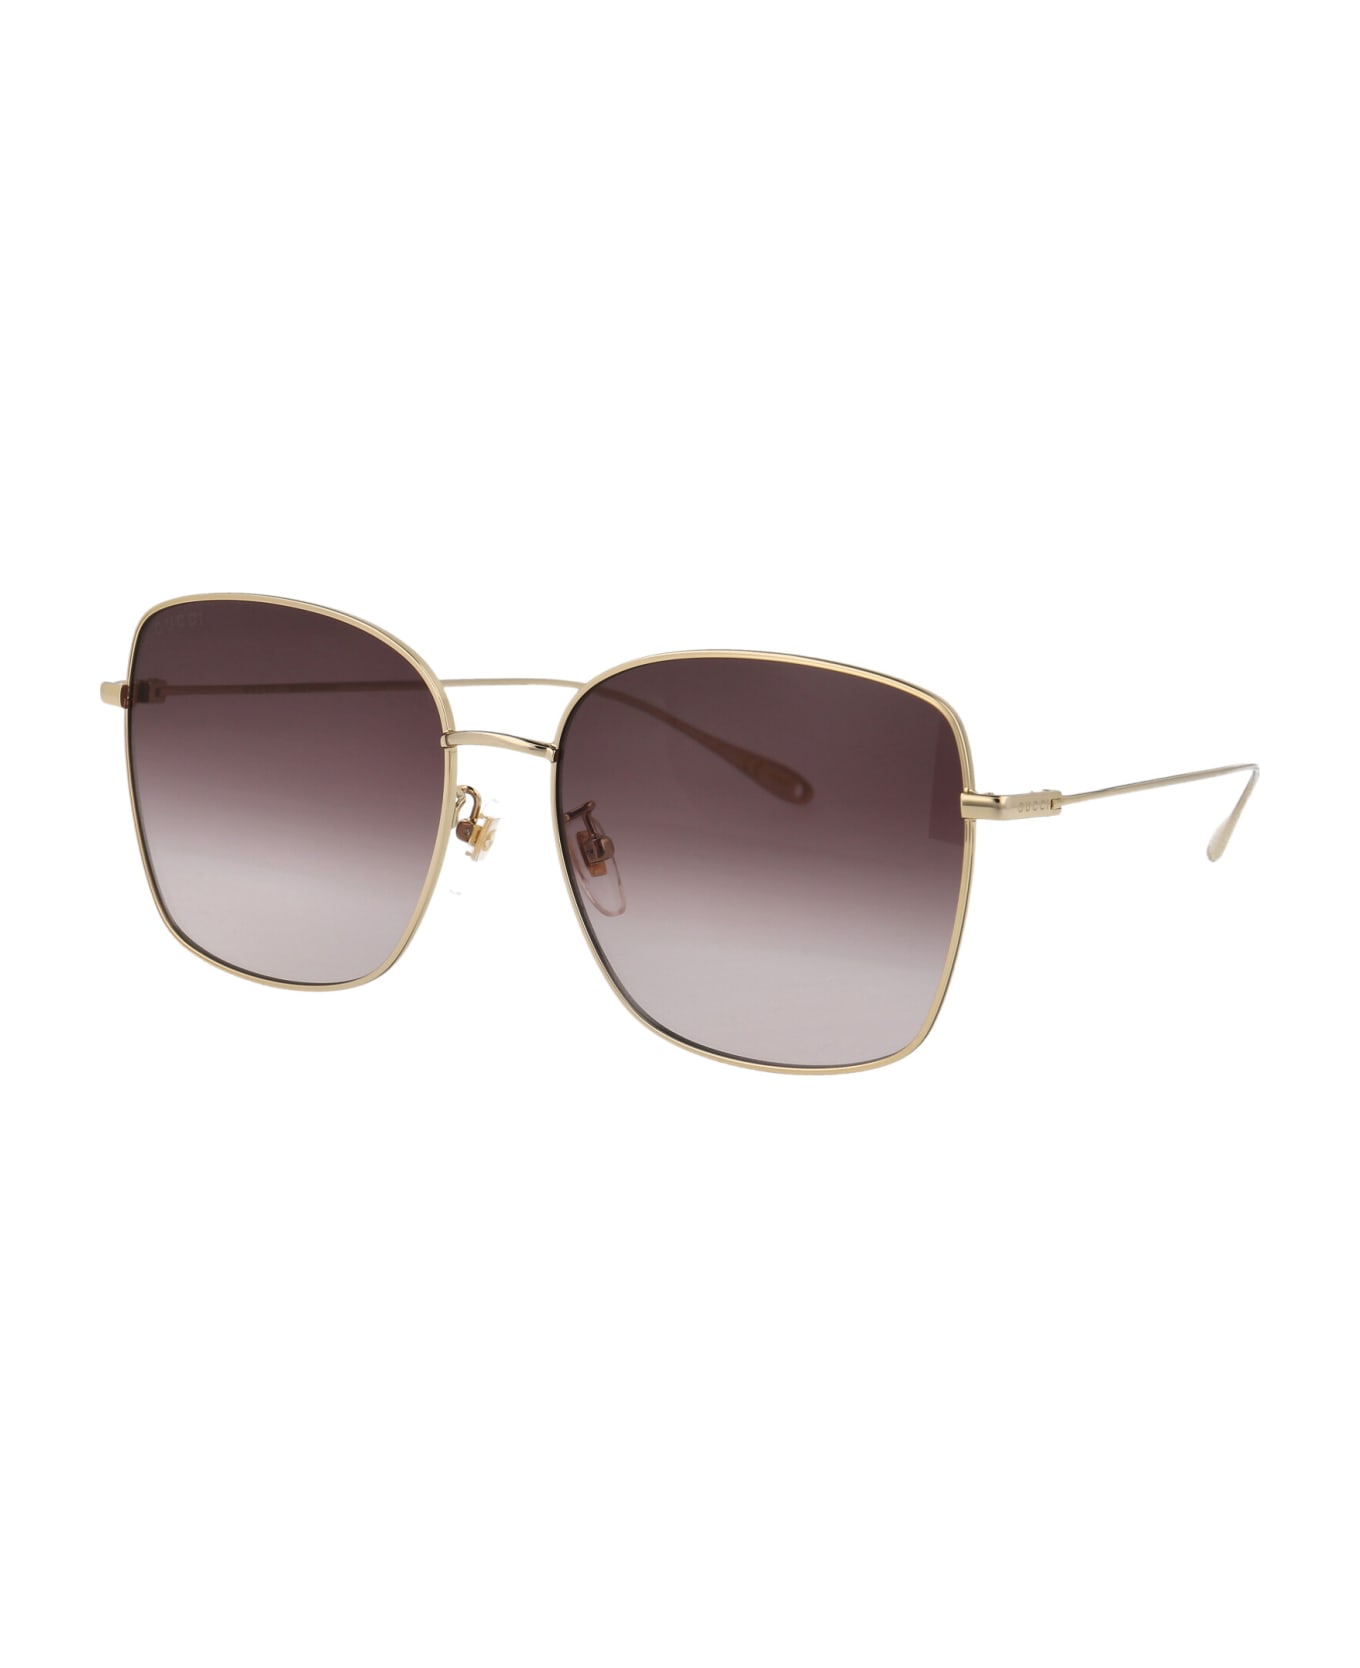 Gucci Eyewear Gg1030sk Sunglasses - 002 GOLD GOLD BROWN サングラス